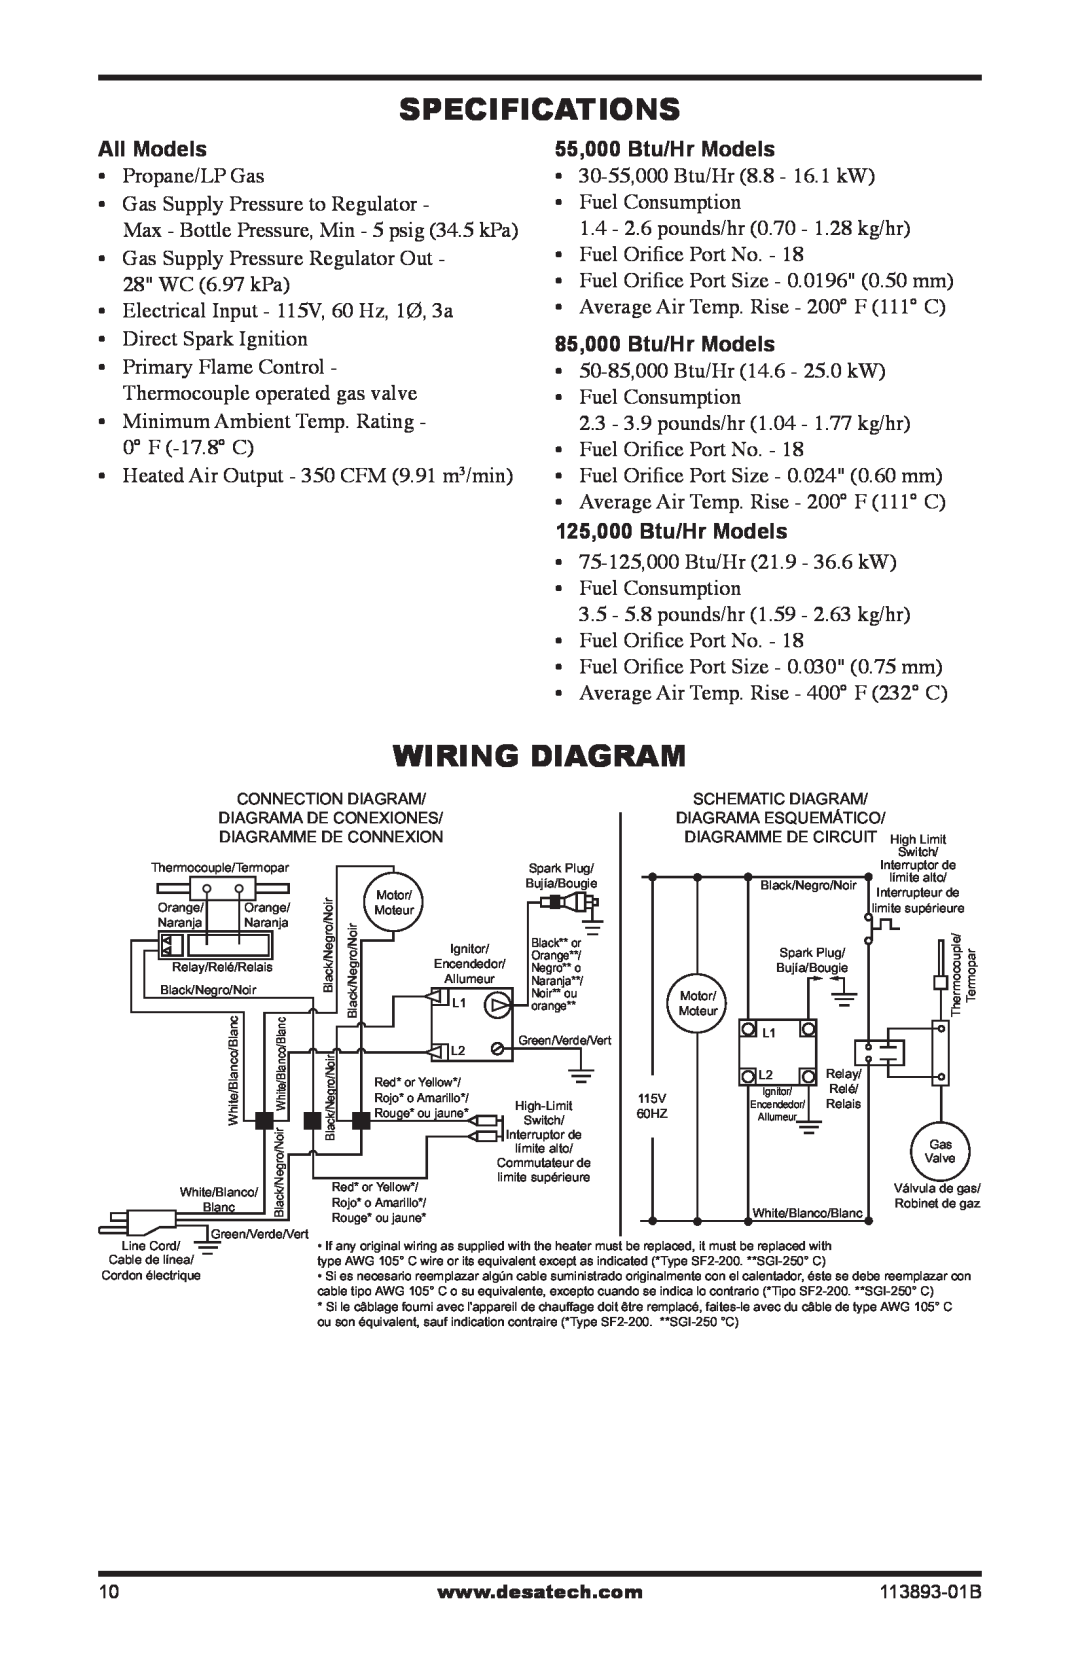 Desa Air Conditioner owner manual Specifications, Wiring Diagram, All Models, 55,000 Btu/Hr Models, 85,000 Btu/Hr Models 